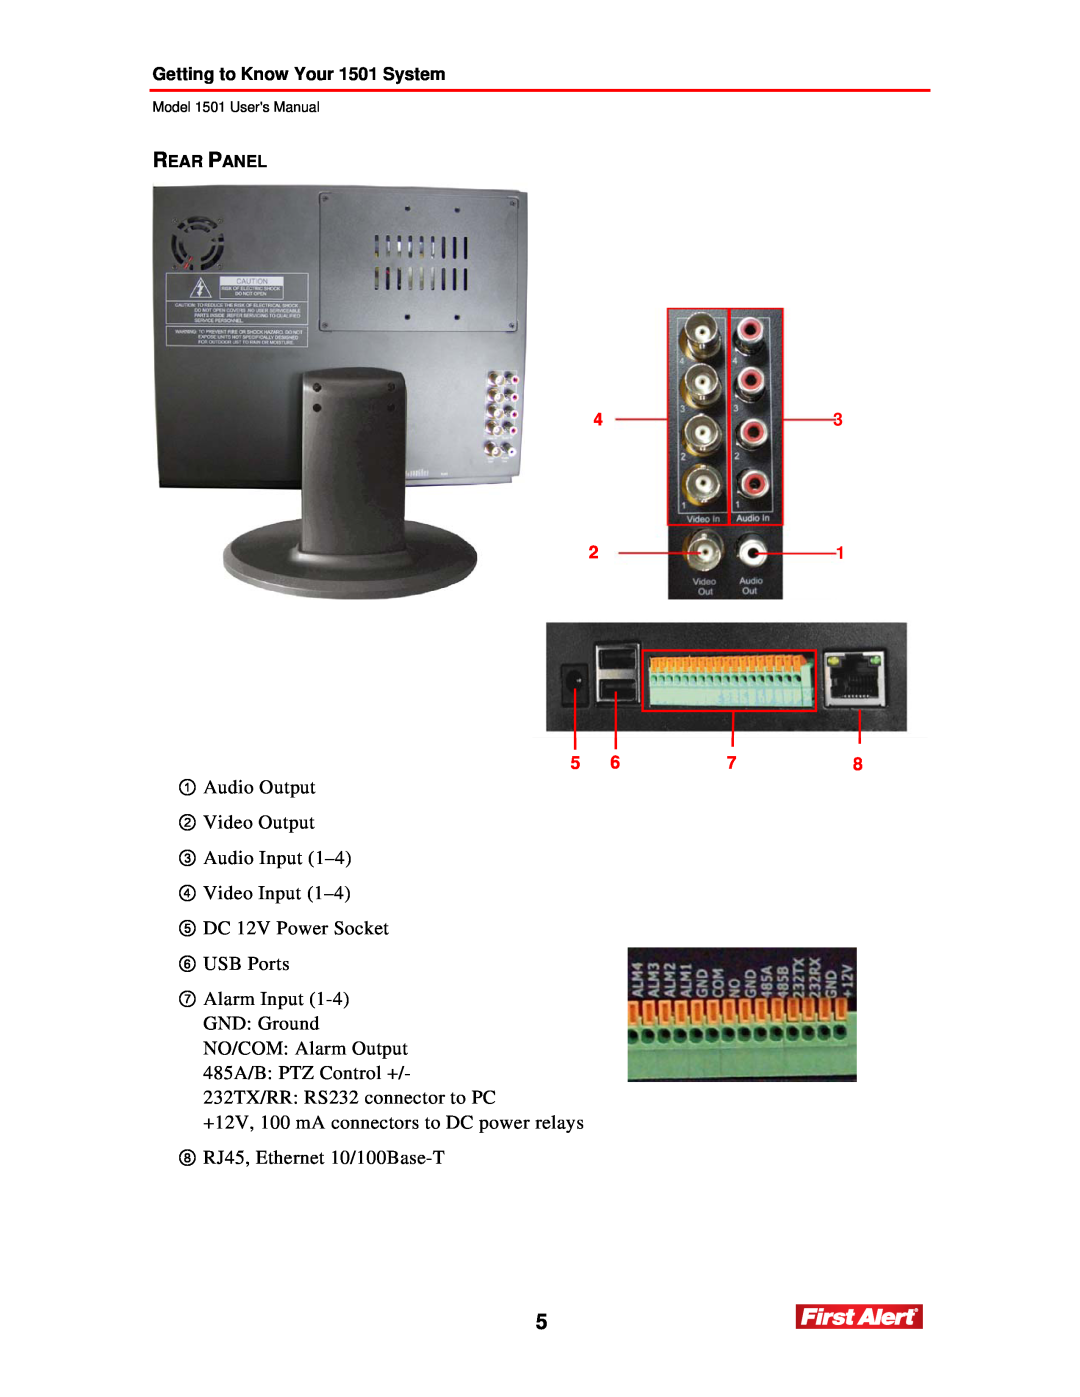 First Alert 1501 ①Audio Output ② Video Output ③ Audio Input, ④ Video Input 1-4 ⑤ DC 12V Power Socket, ⑥ USB Ports 